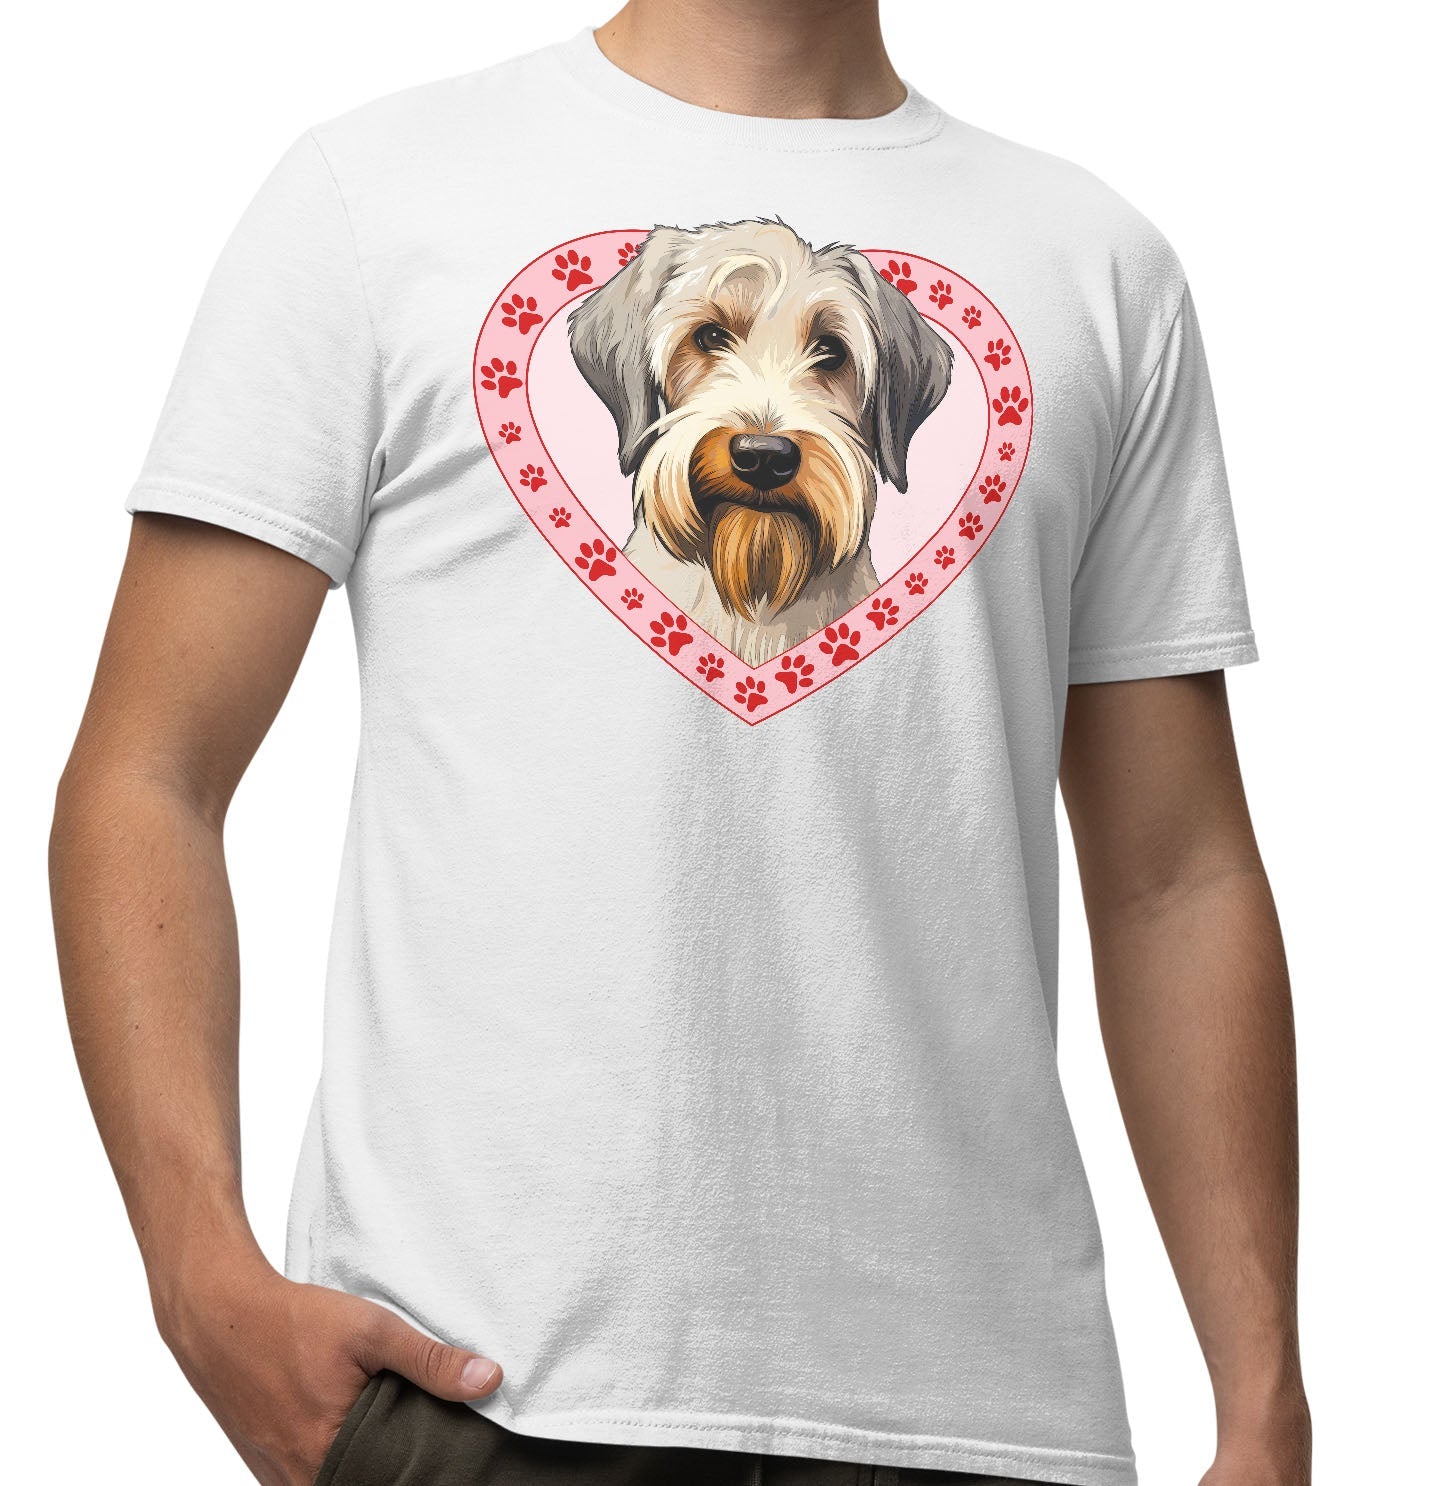 Sealyham Terrier Illustration In Heart - Adult Unisex T-Shirt